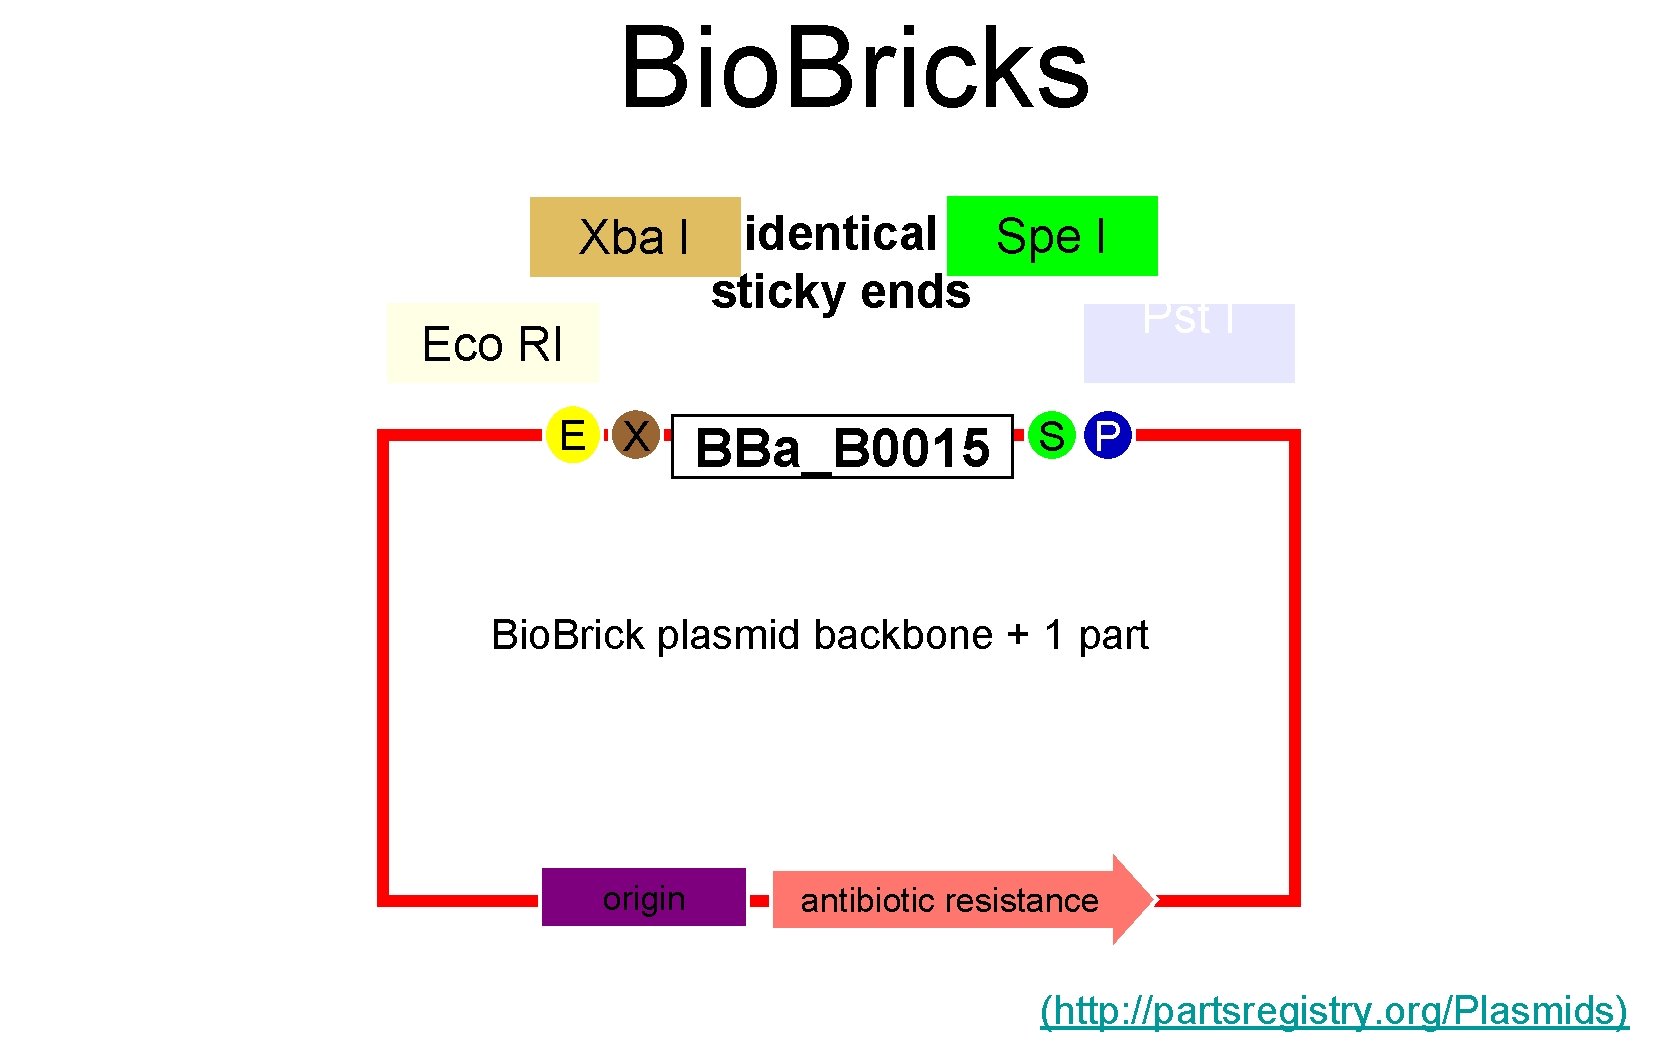 Bio. Bricks Xba I Eco RI E X identical Spe I sticky ends BBa_B